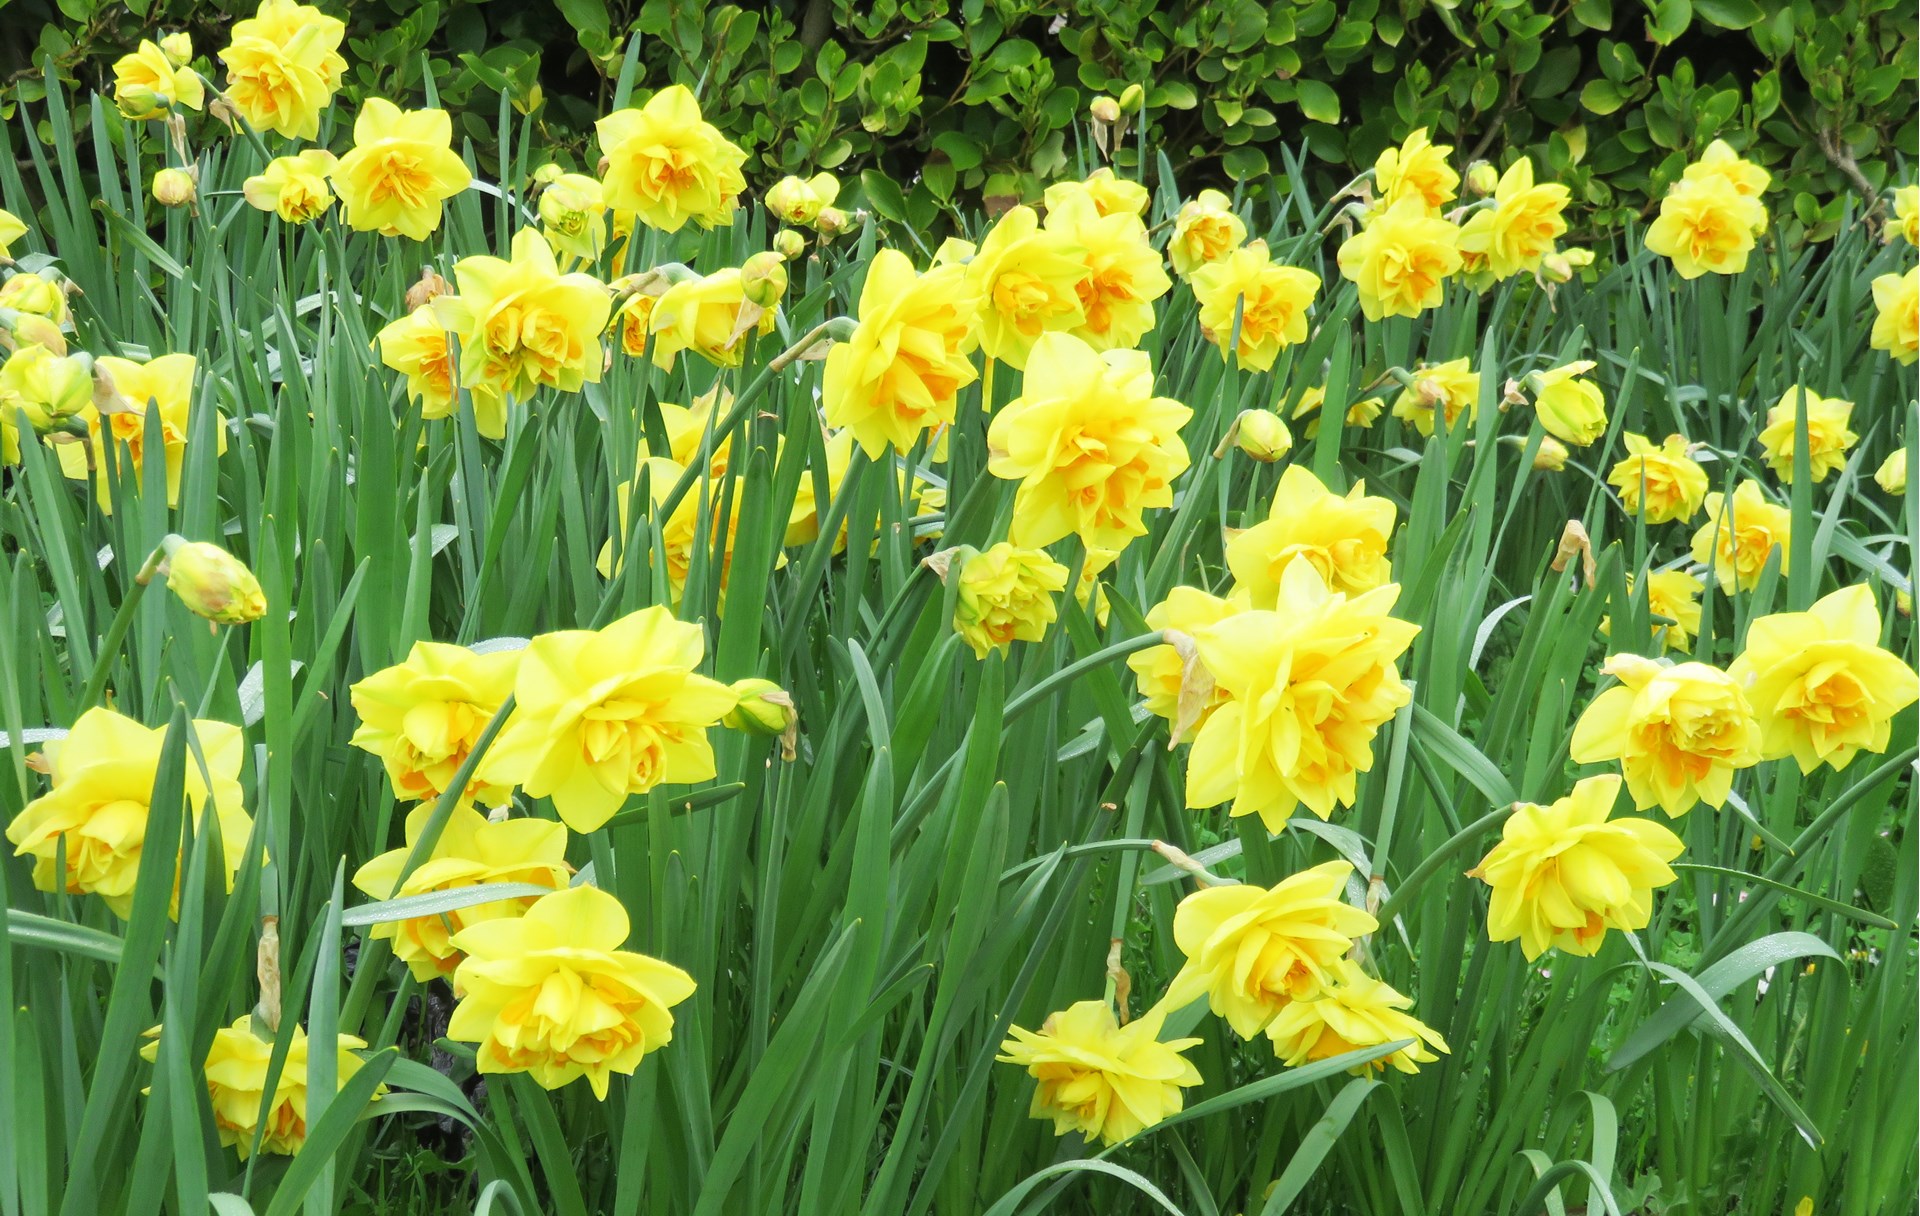 Daffodils in The Helen Garden